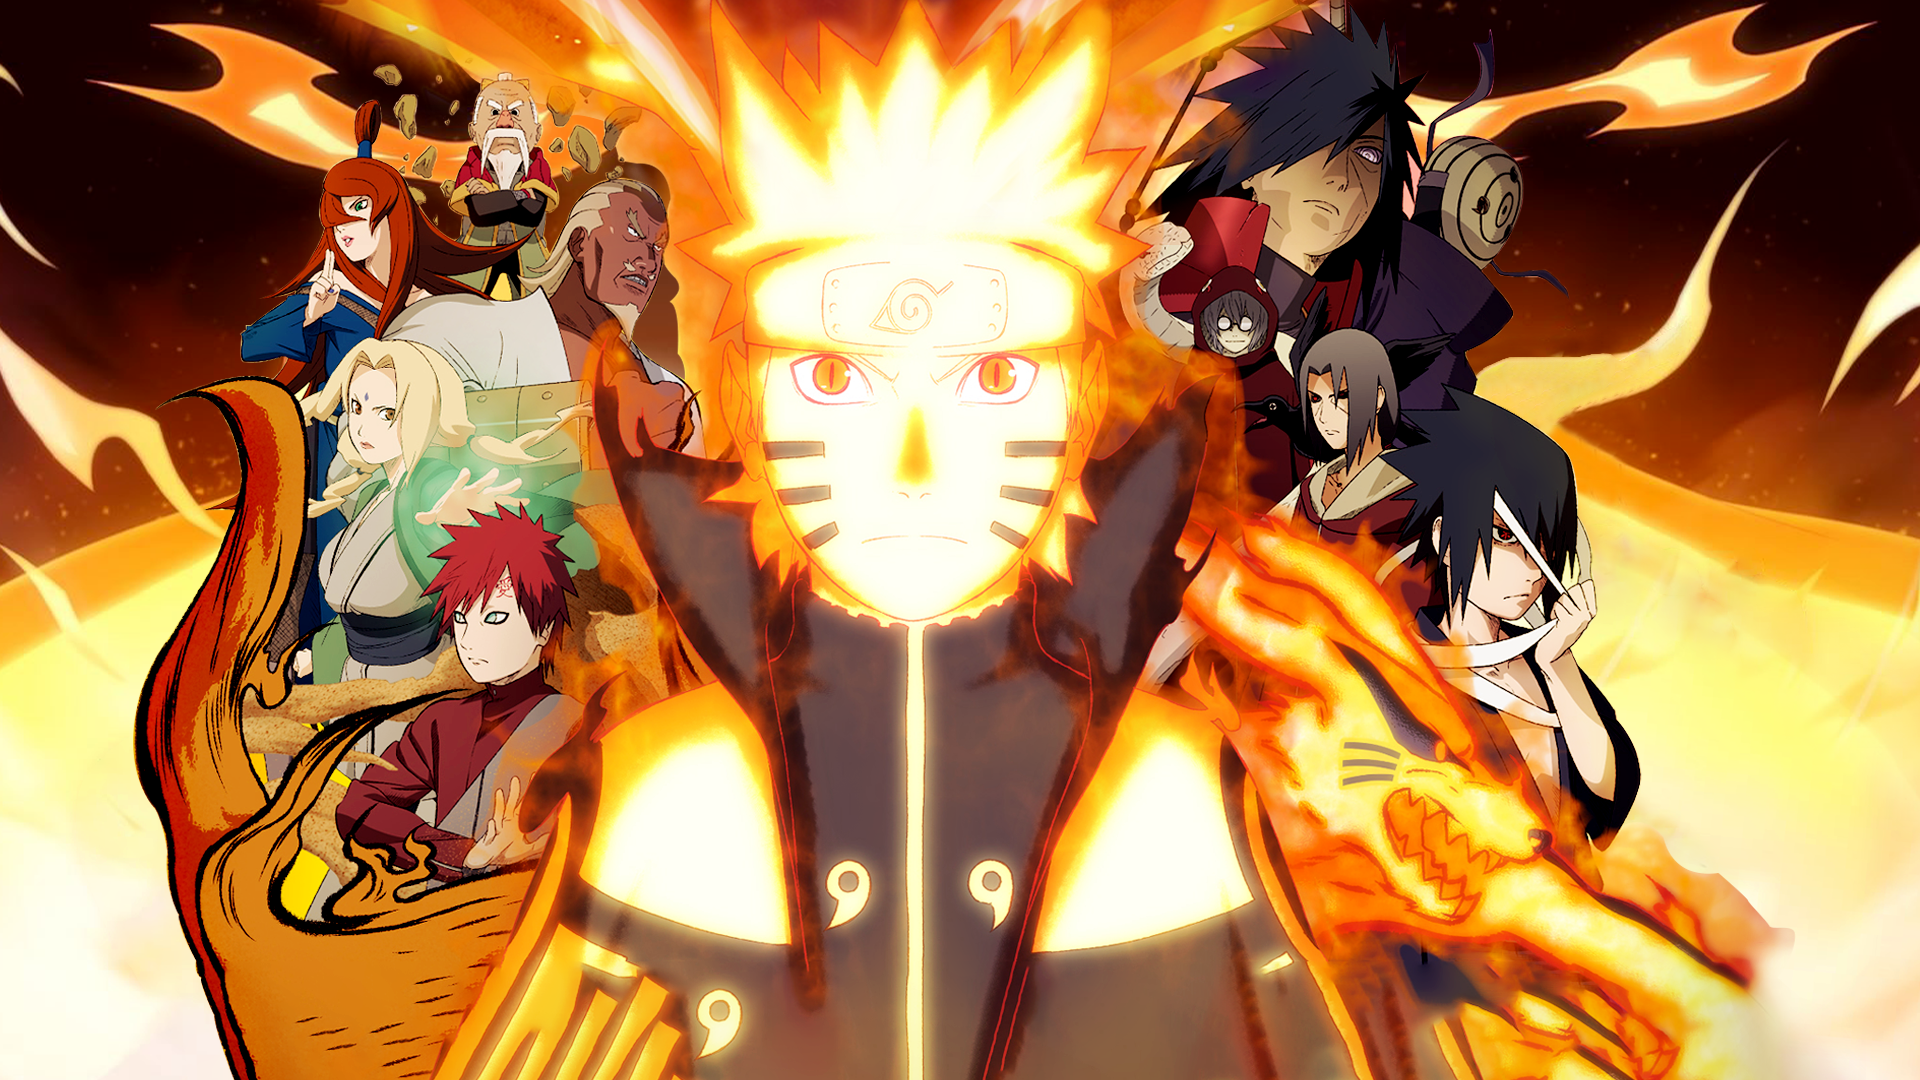 Crazy Naruto: Ninja Blazing